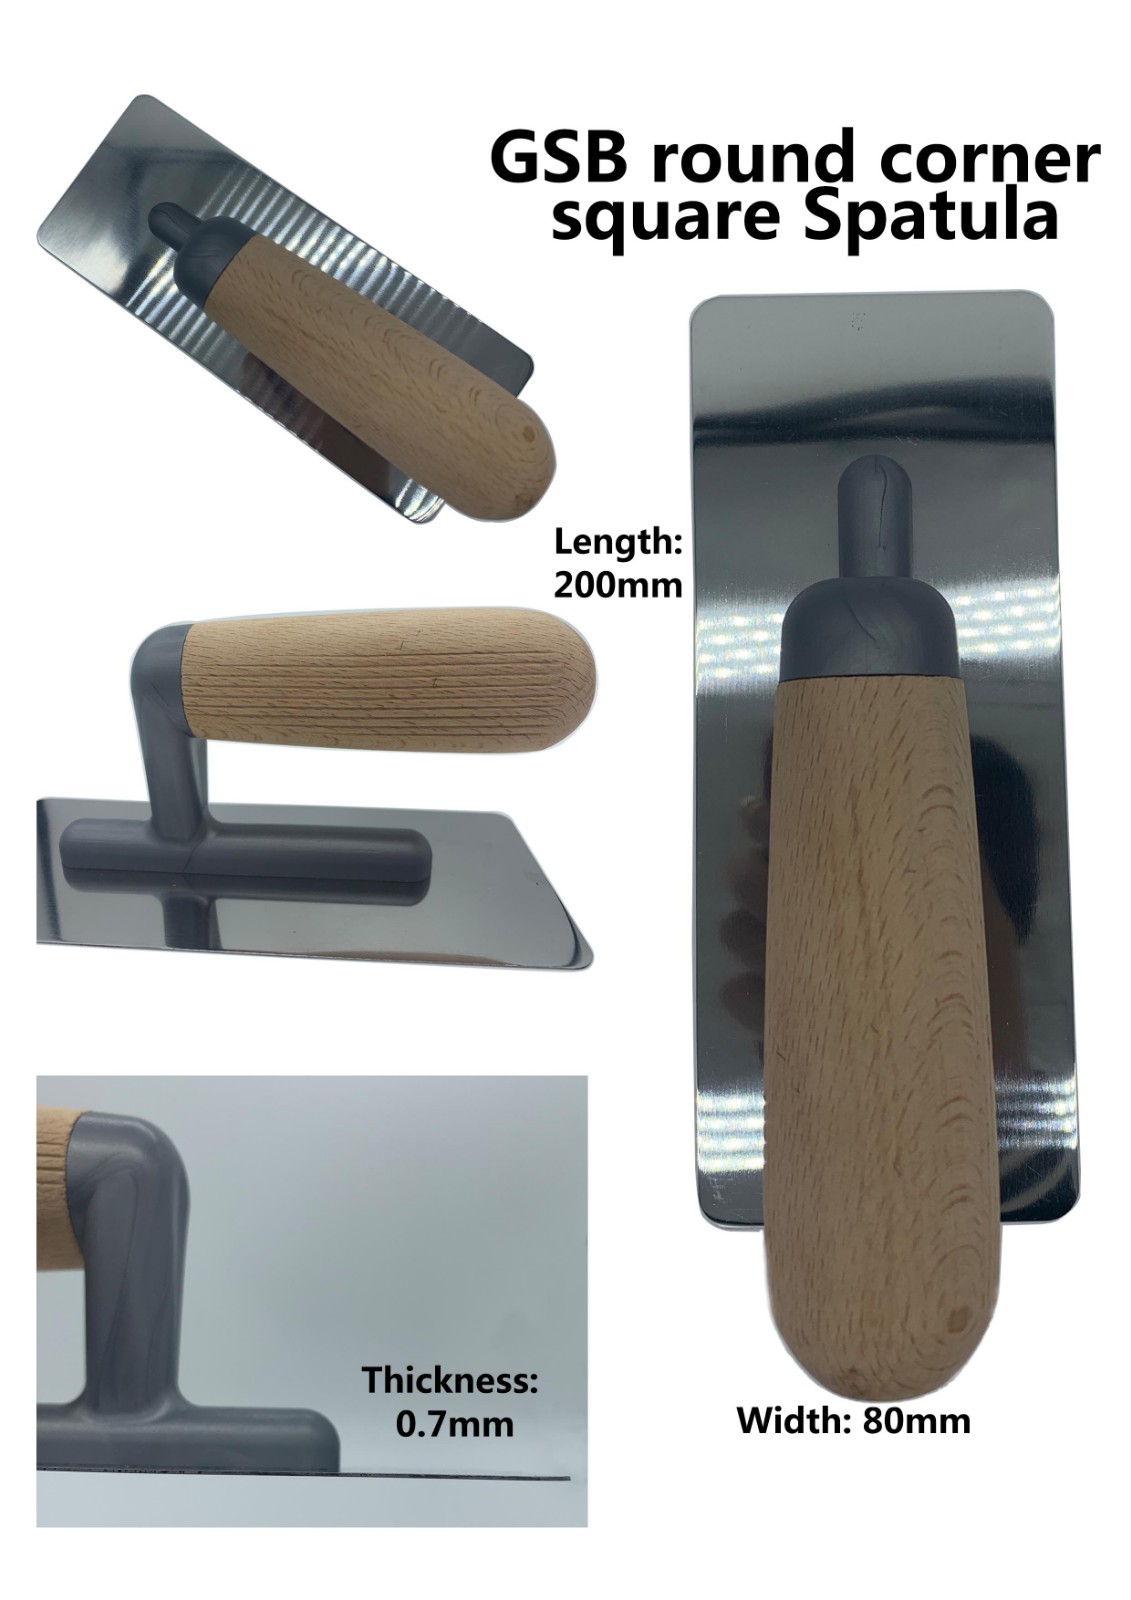 GSB rounded corner square spatula